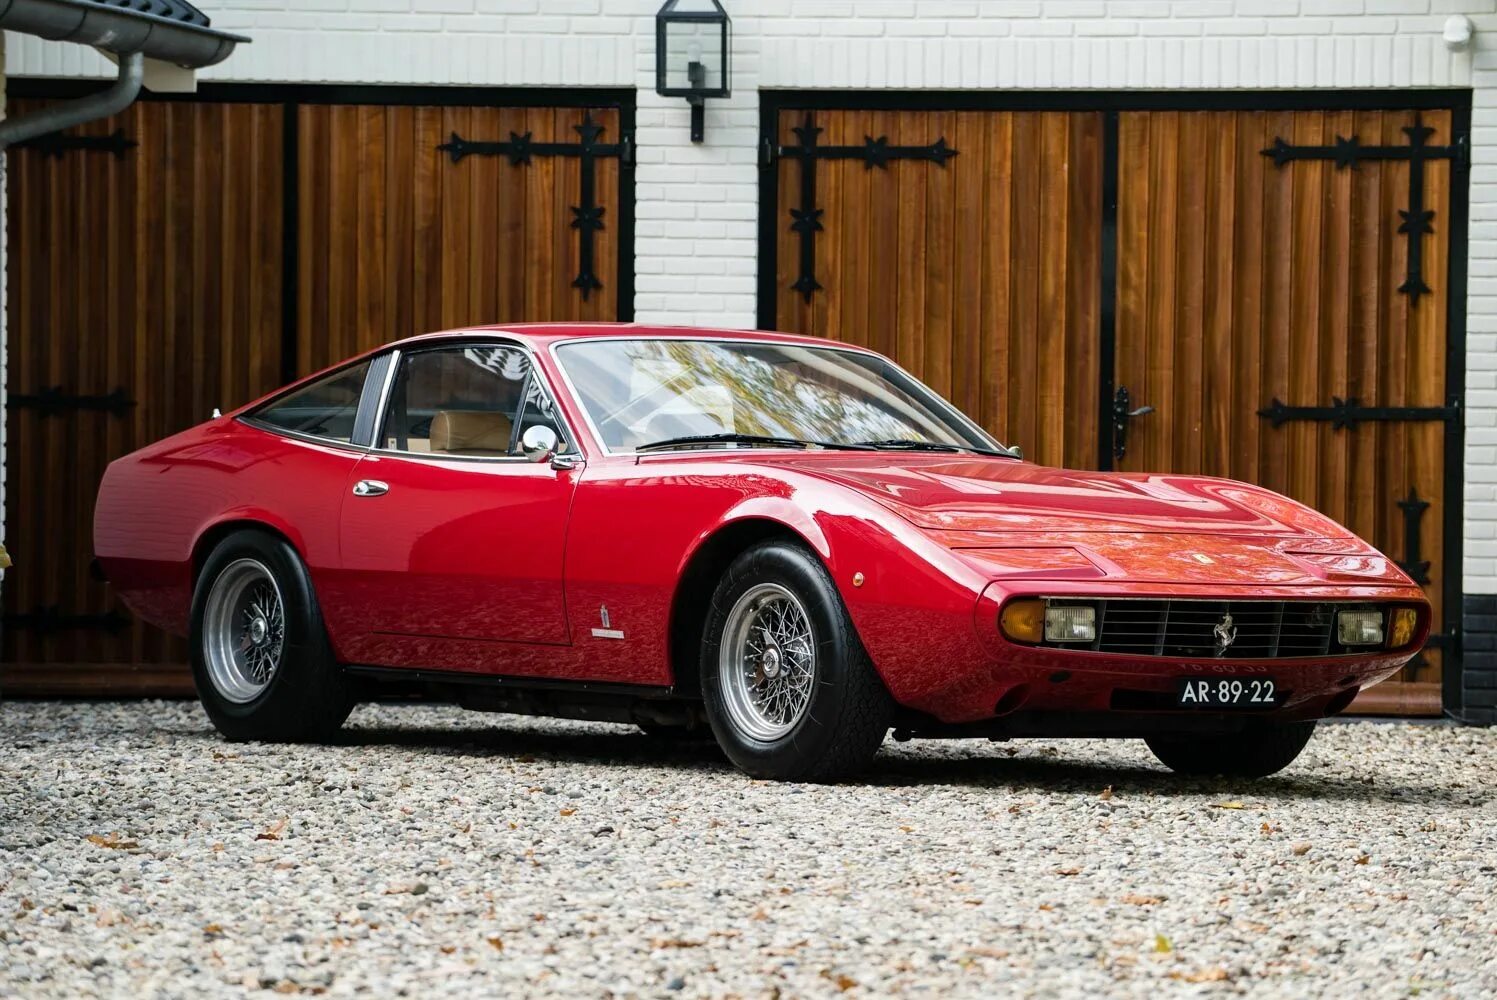 Ferrari 365. Ferrari 365 GTC/4. Ferrari 365 gt4 2+2. Ferrari 365 gt4 2+2 1972. Ferrari 365 GTC 4s.